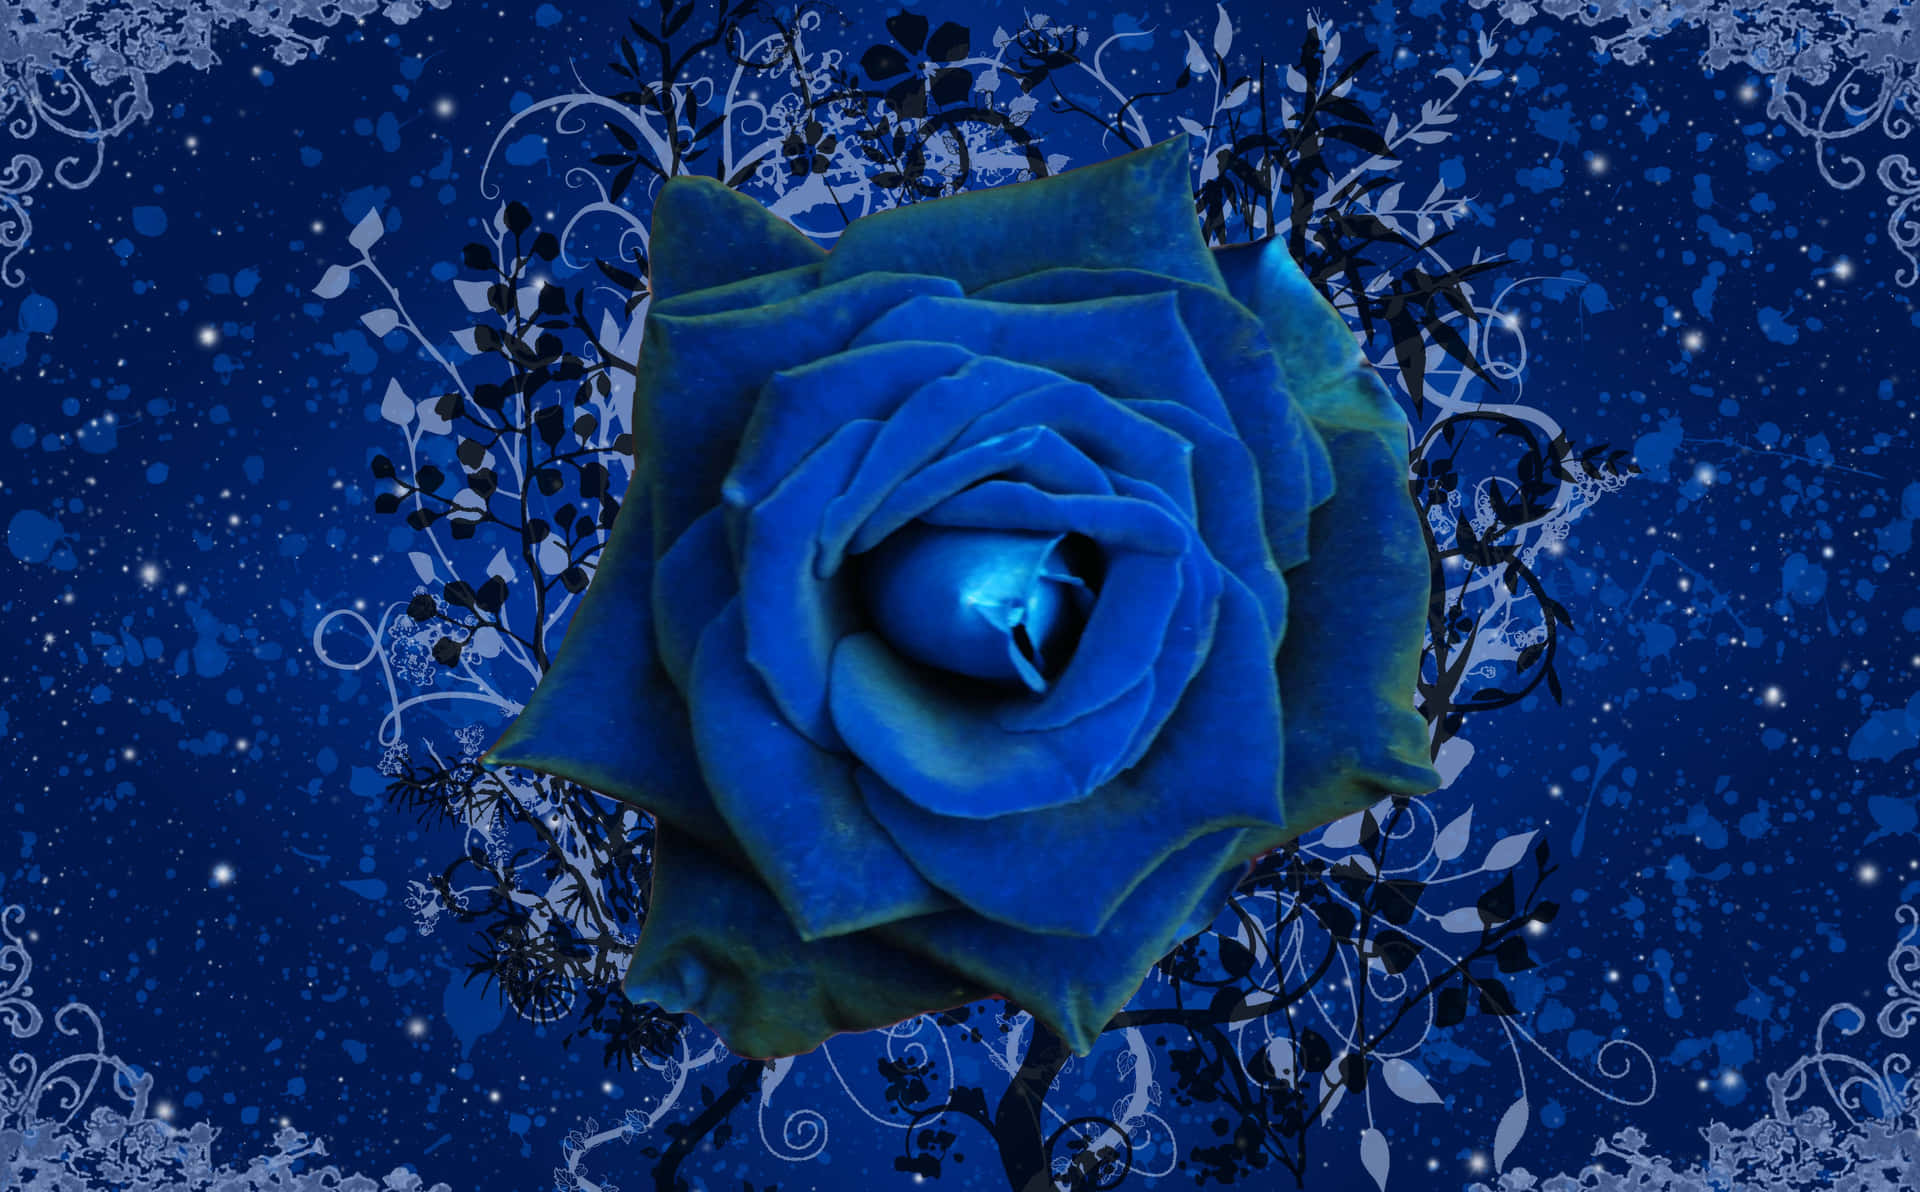 Blue Rose Artistry - Breathtaking Beauty of Blooming Blue Rose